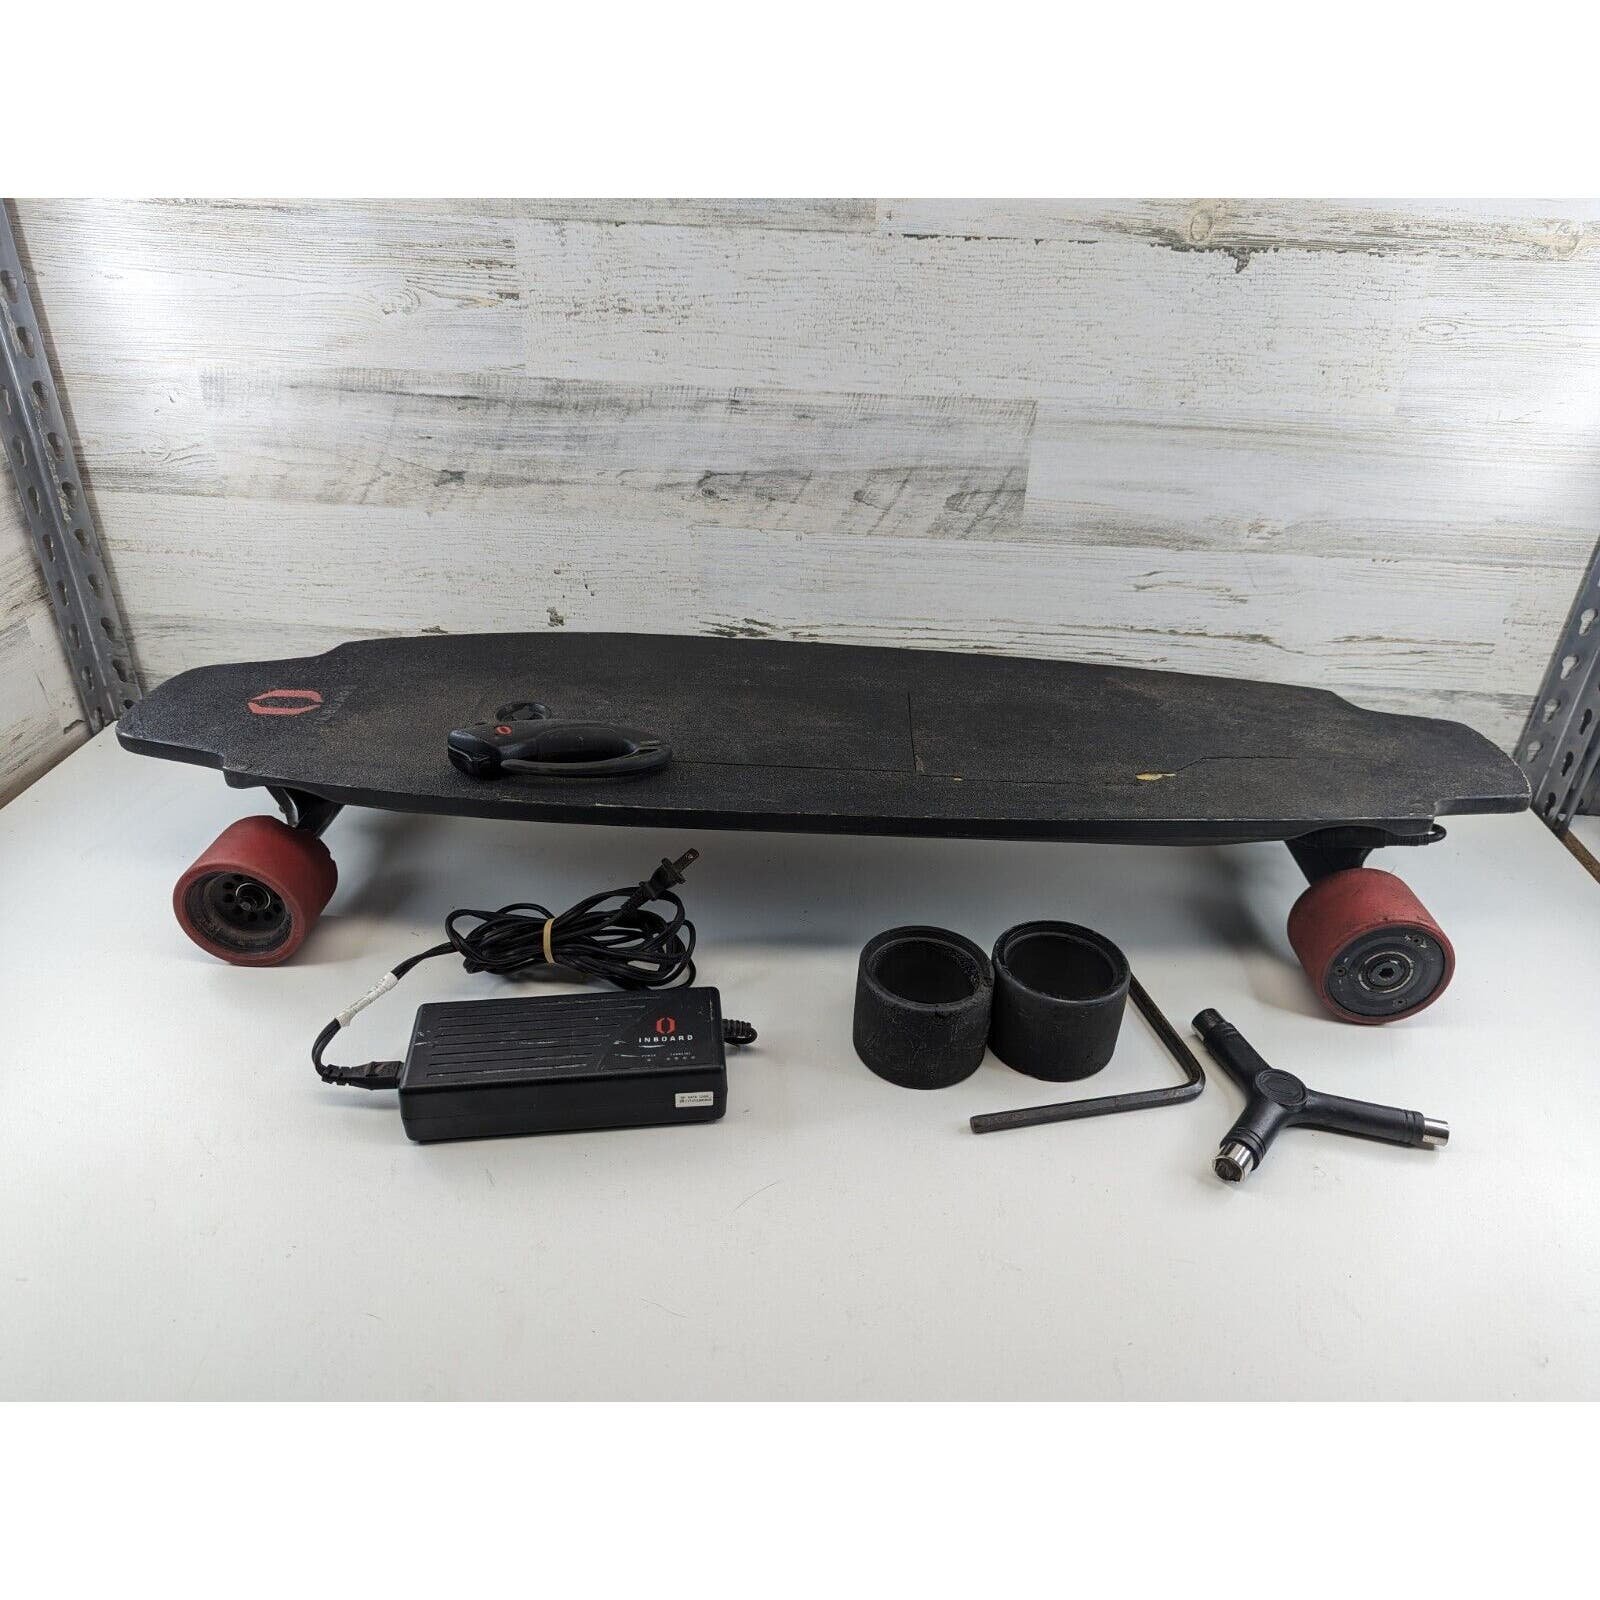 Inboard Technology M1 Electric Longboard Skateboard Carry Bag No Batt-Untested AhgUF6DtJ